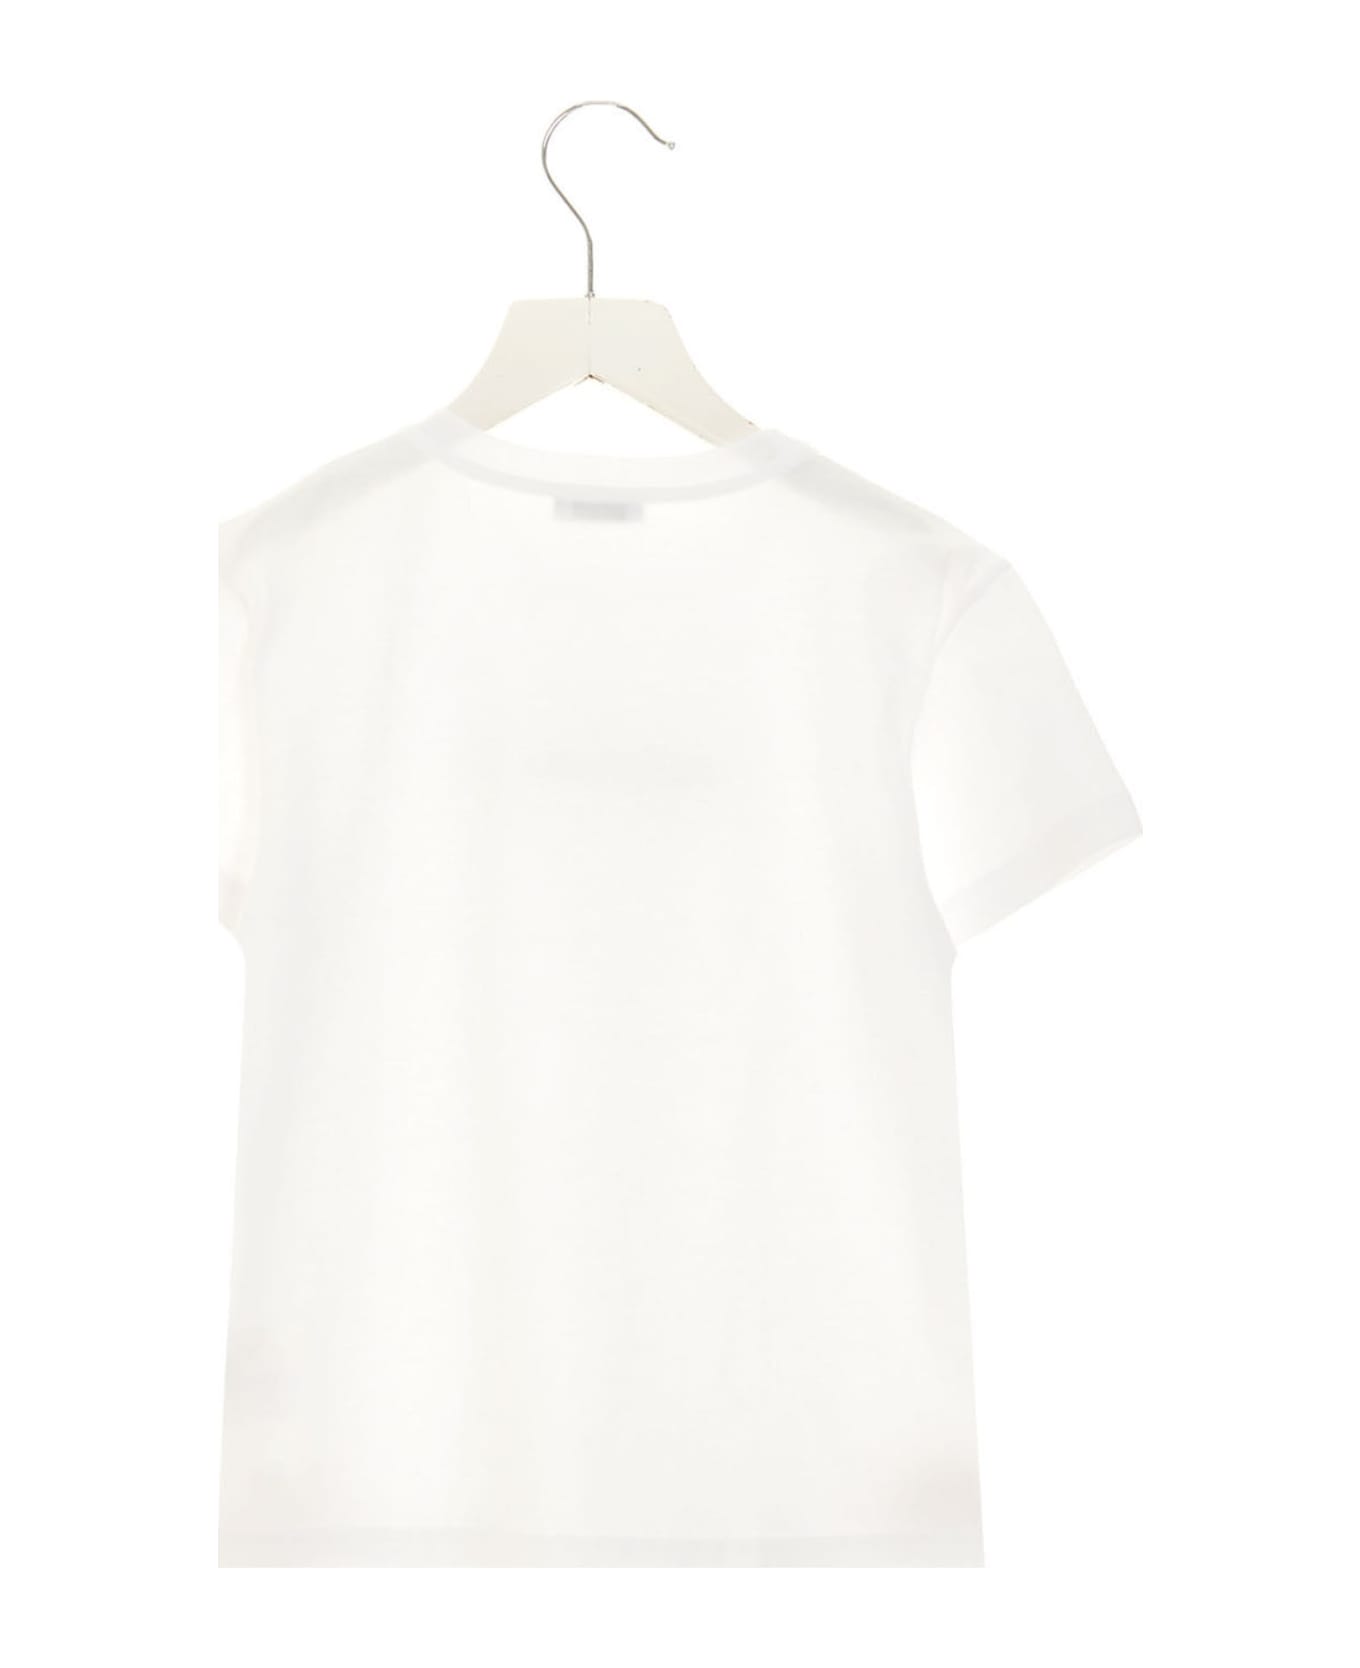 Dolce & Gabbana Boys Embroidery T-shirt - White